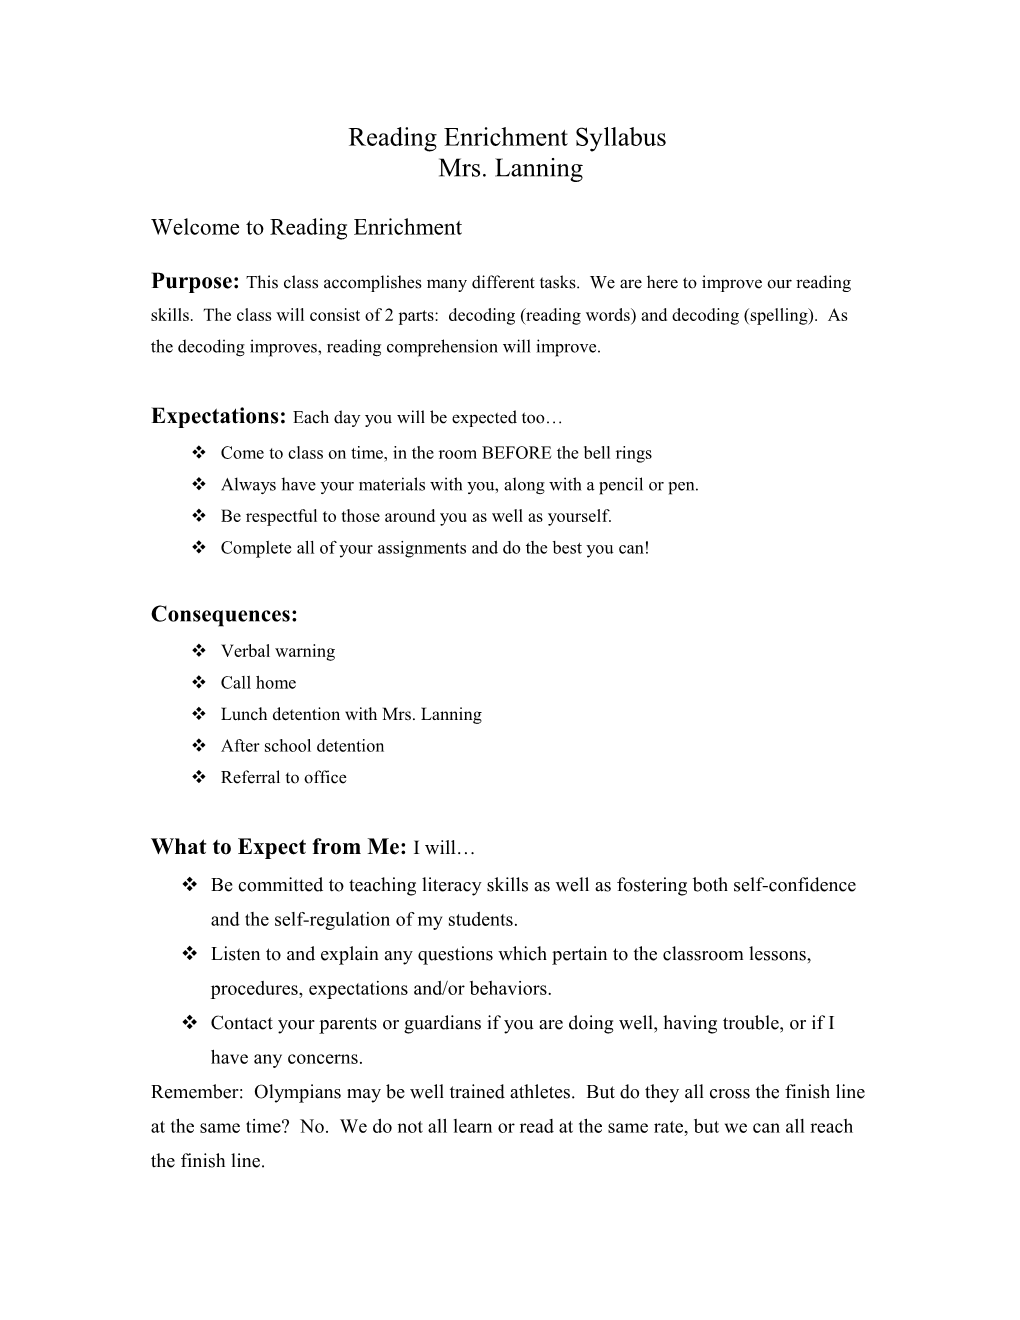 Reading Enrichment Syllabus 2013-2014